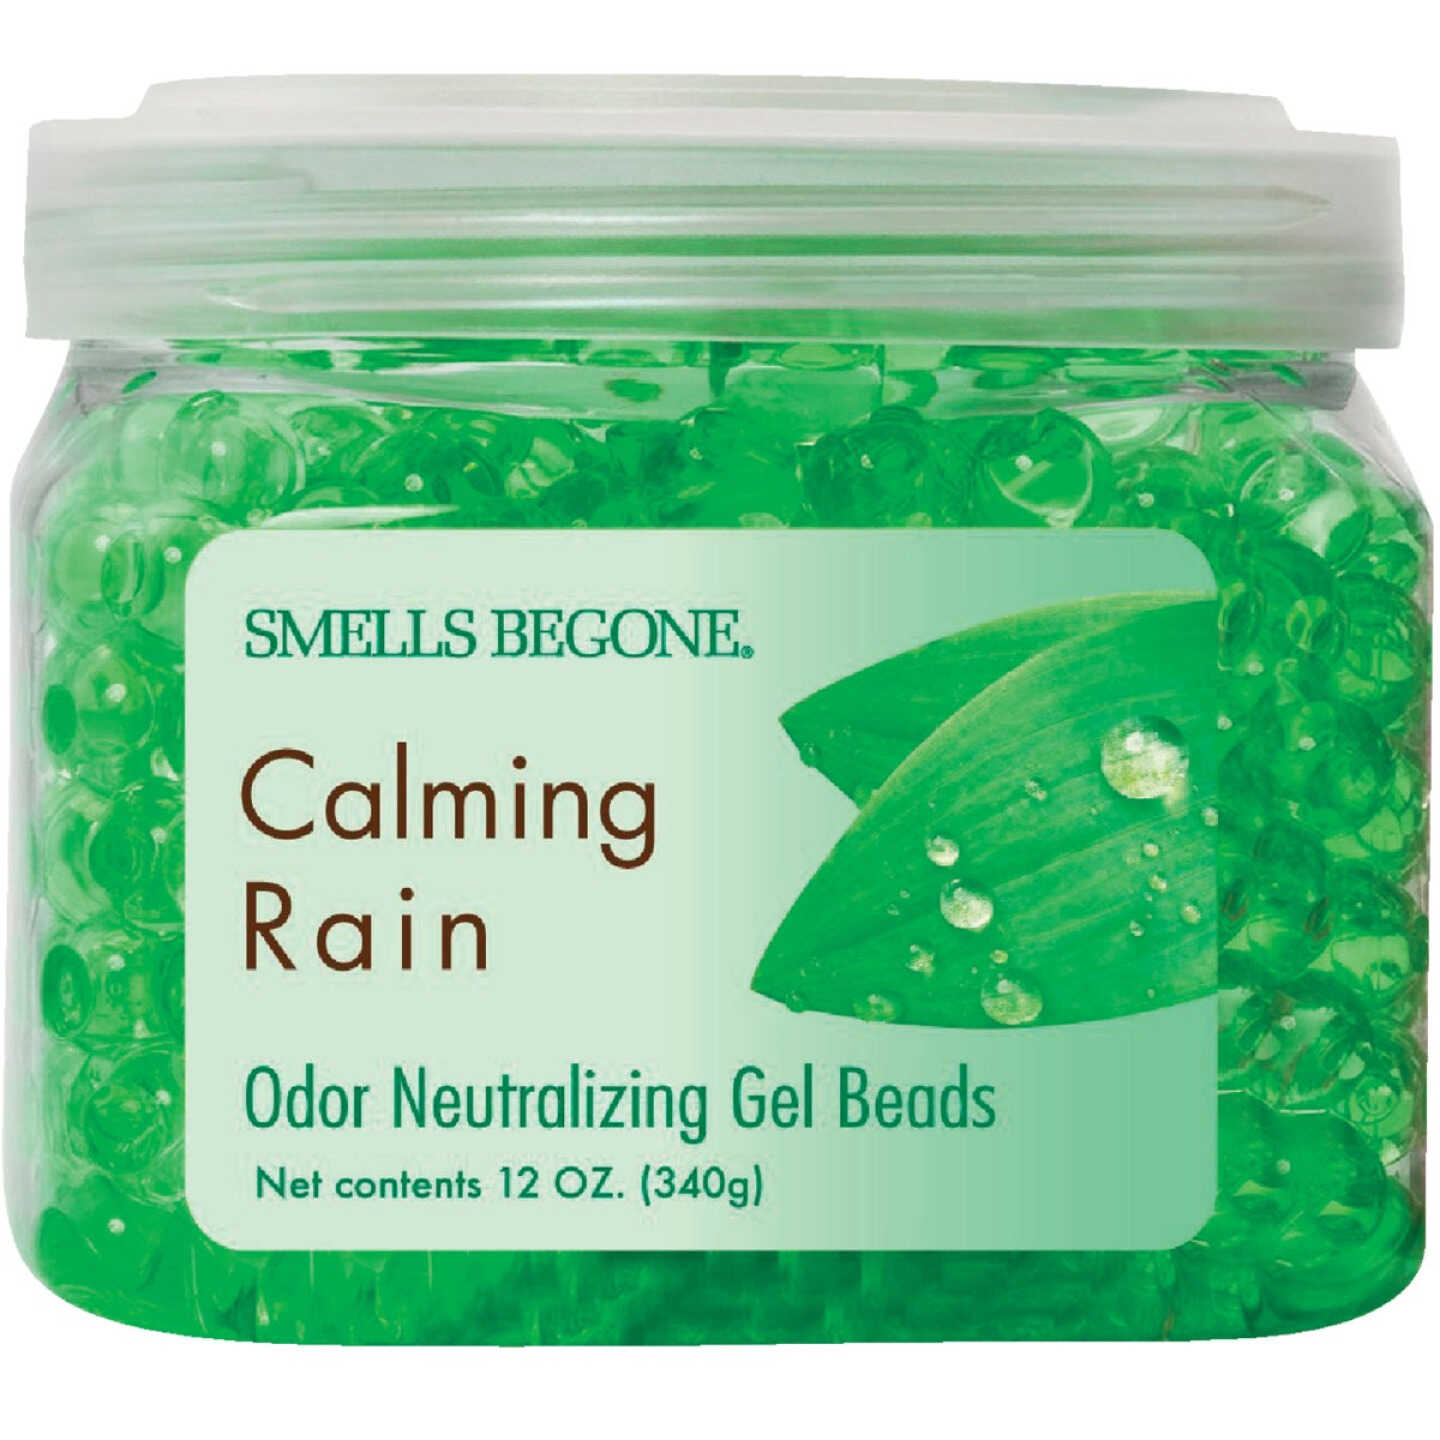 Smells Begone 12 Oz. Gel Beads Calming Rain Odor Neutralizer